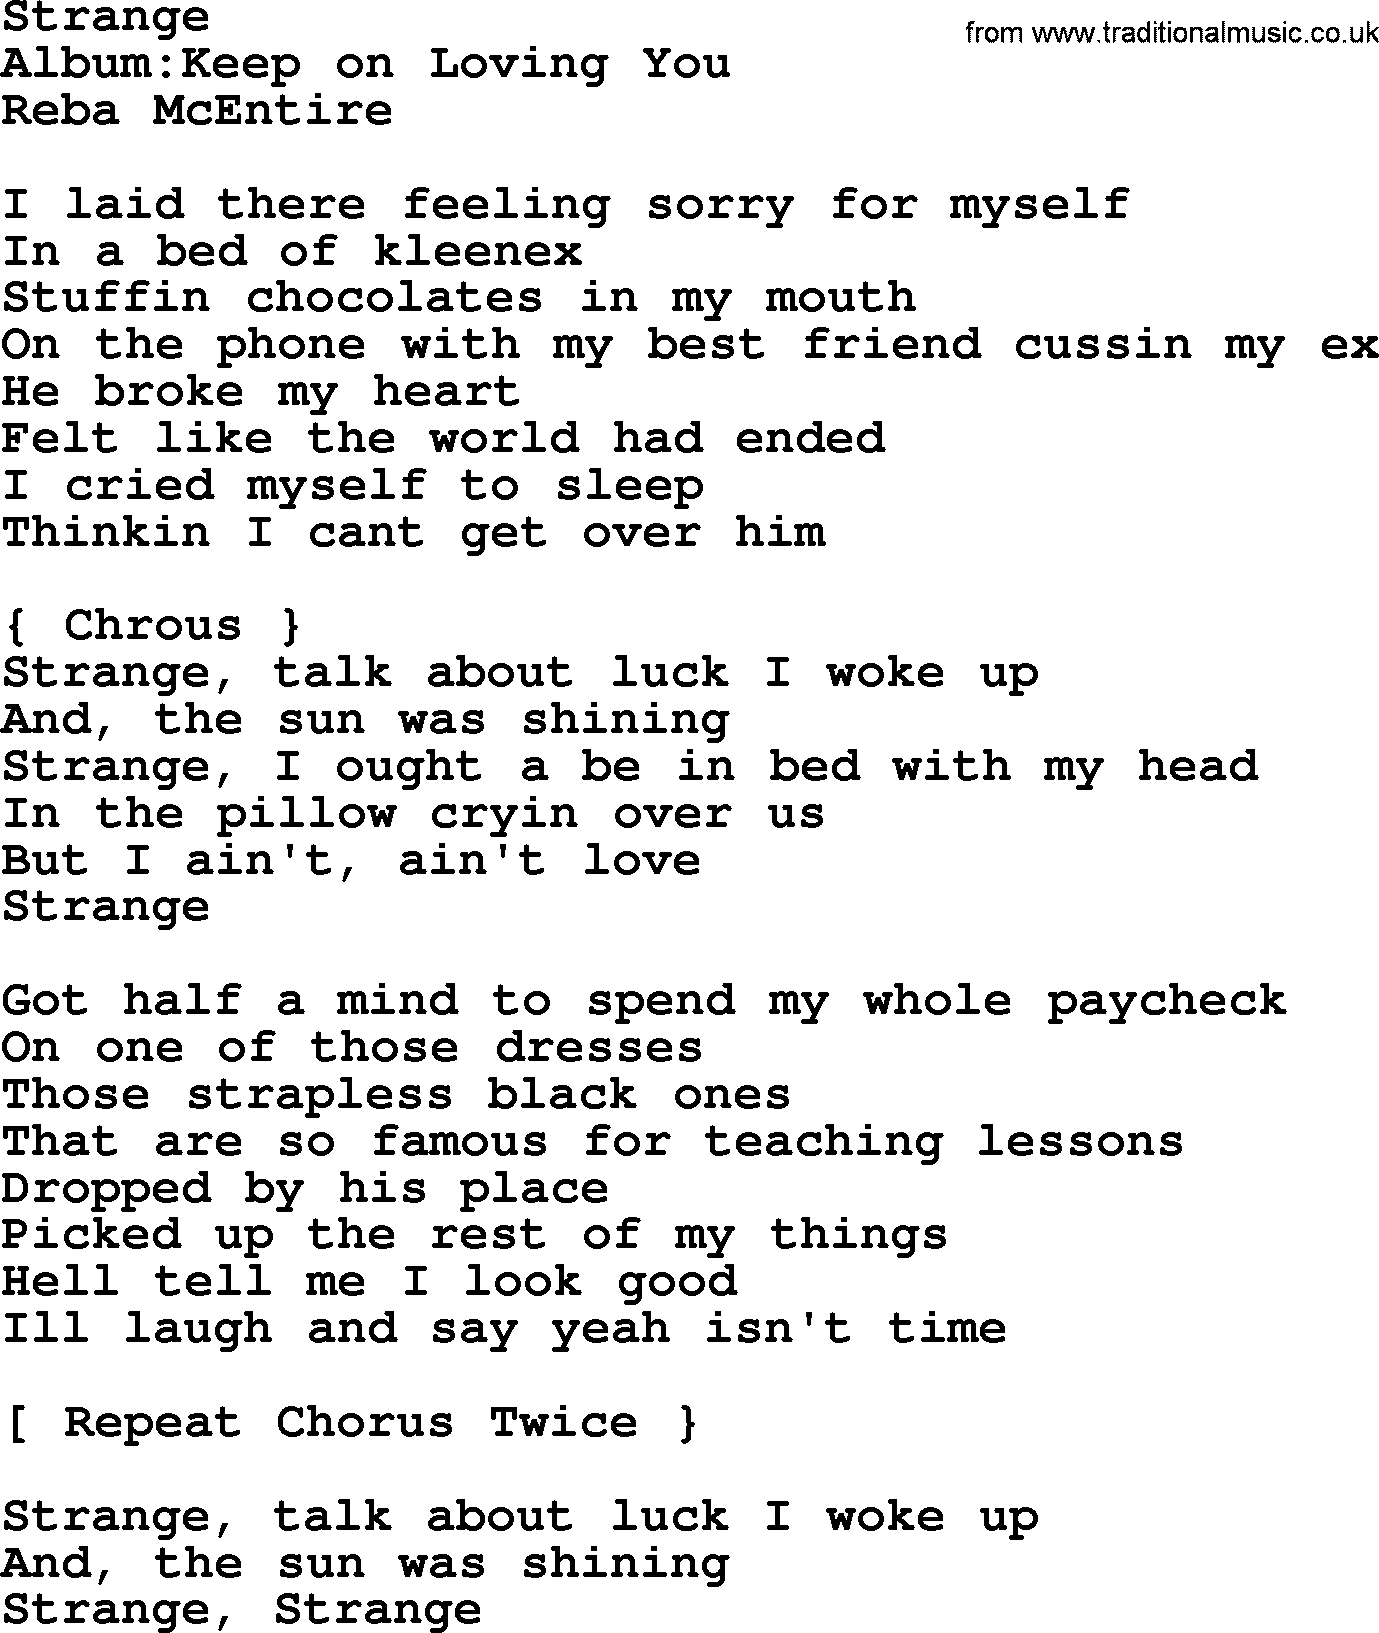 Reba McEntire song: Strange lyrics